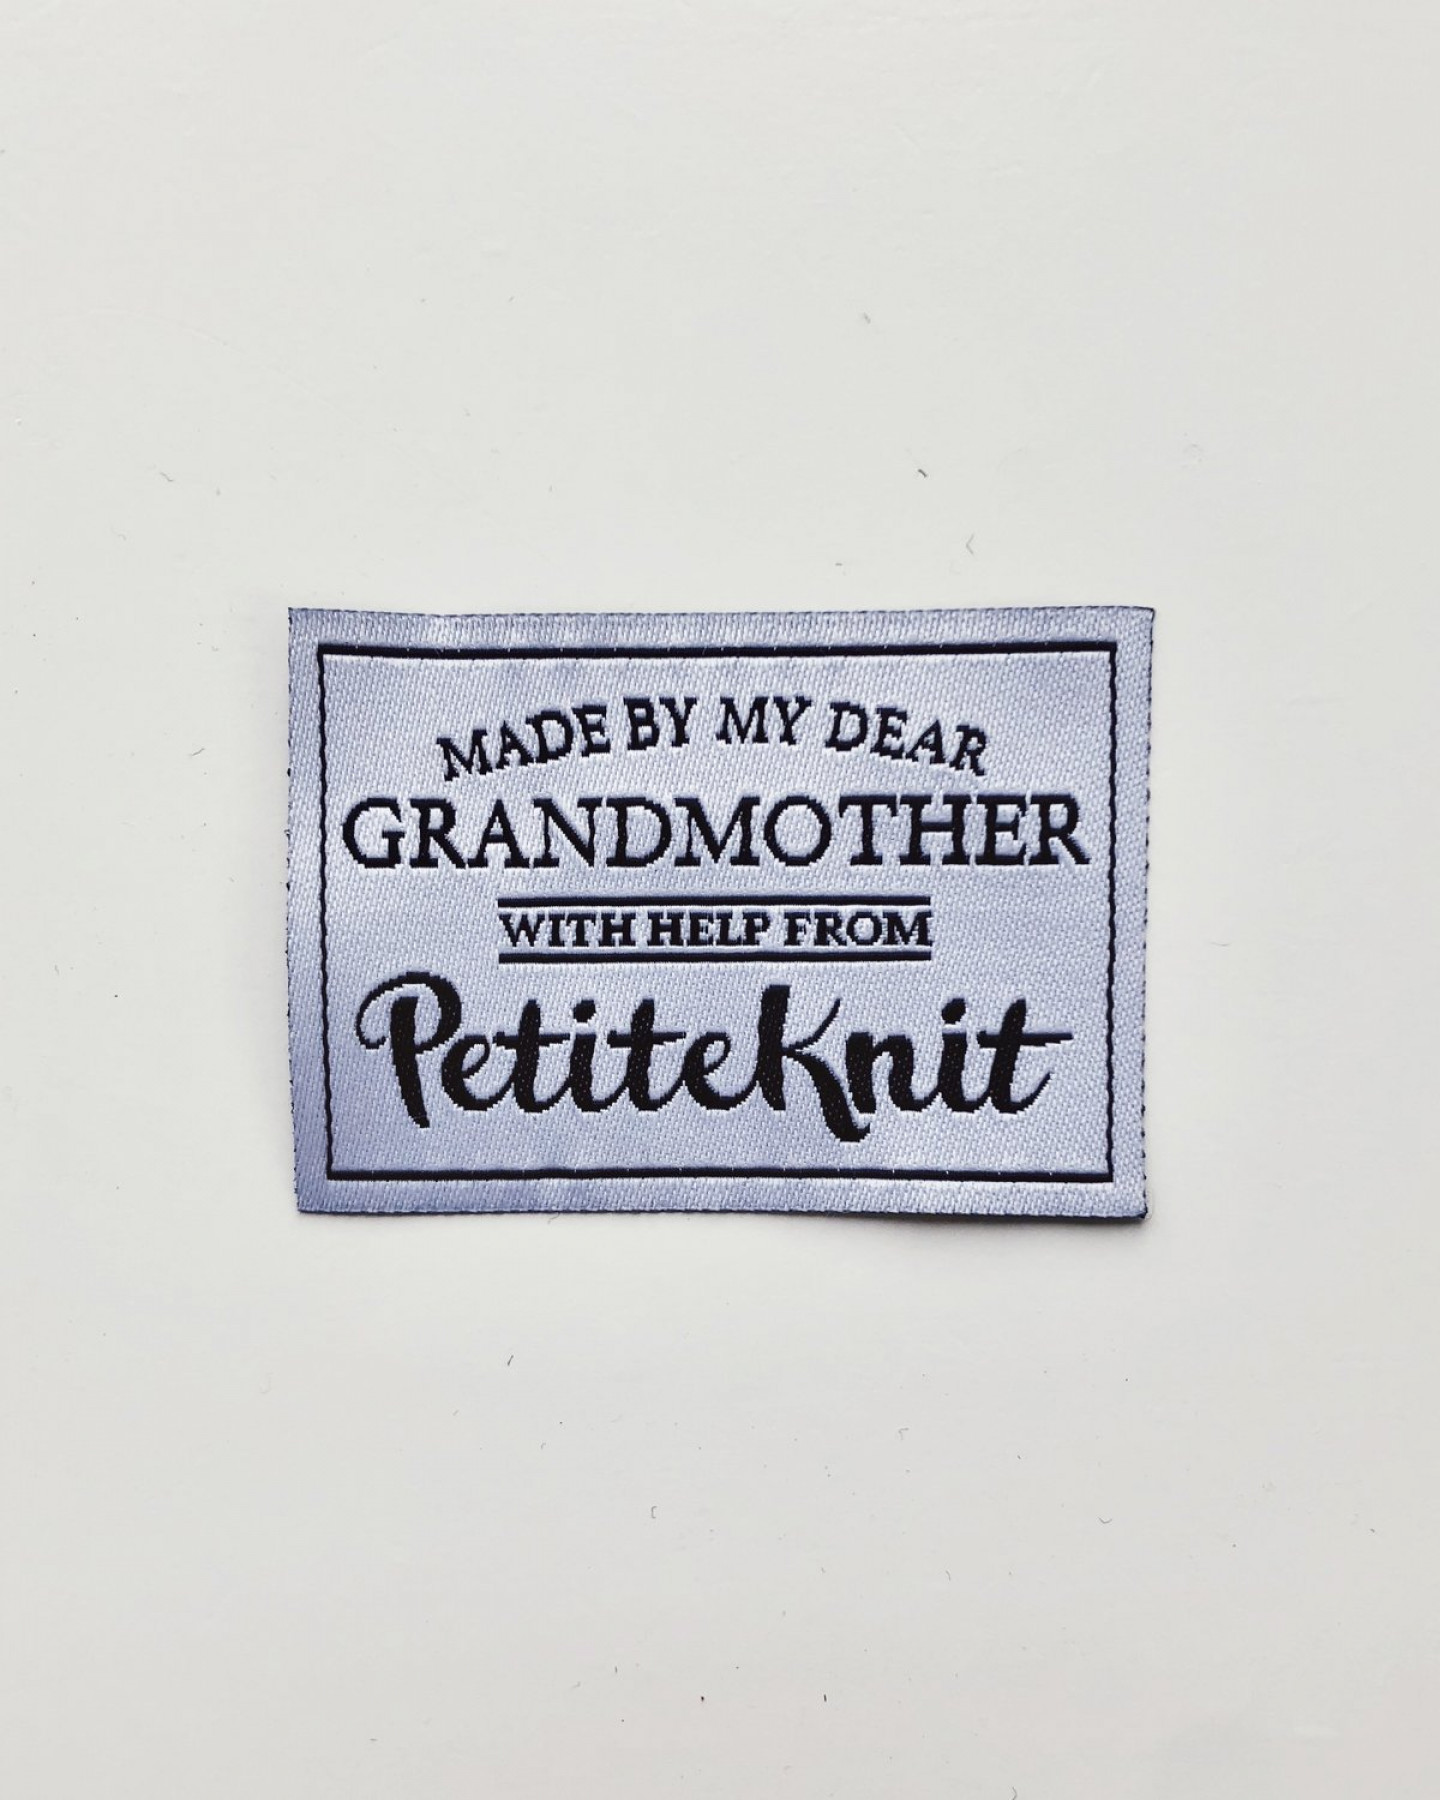 "Made By My Dear Grandmother" by PetiteKnit -kangasmerkki